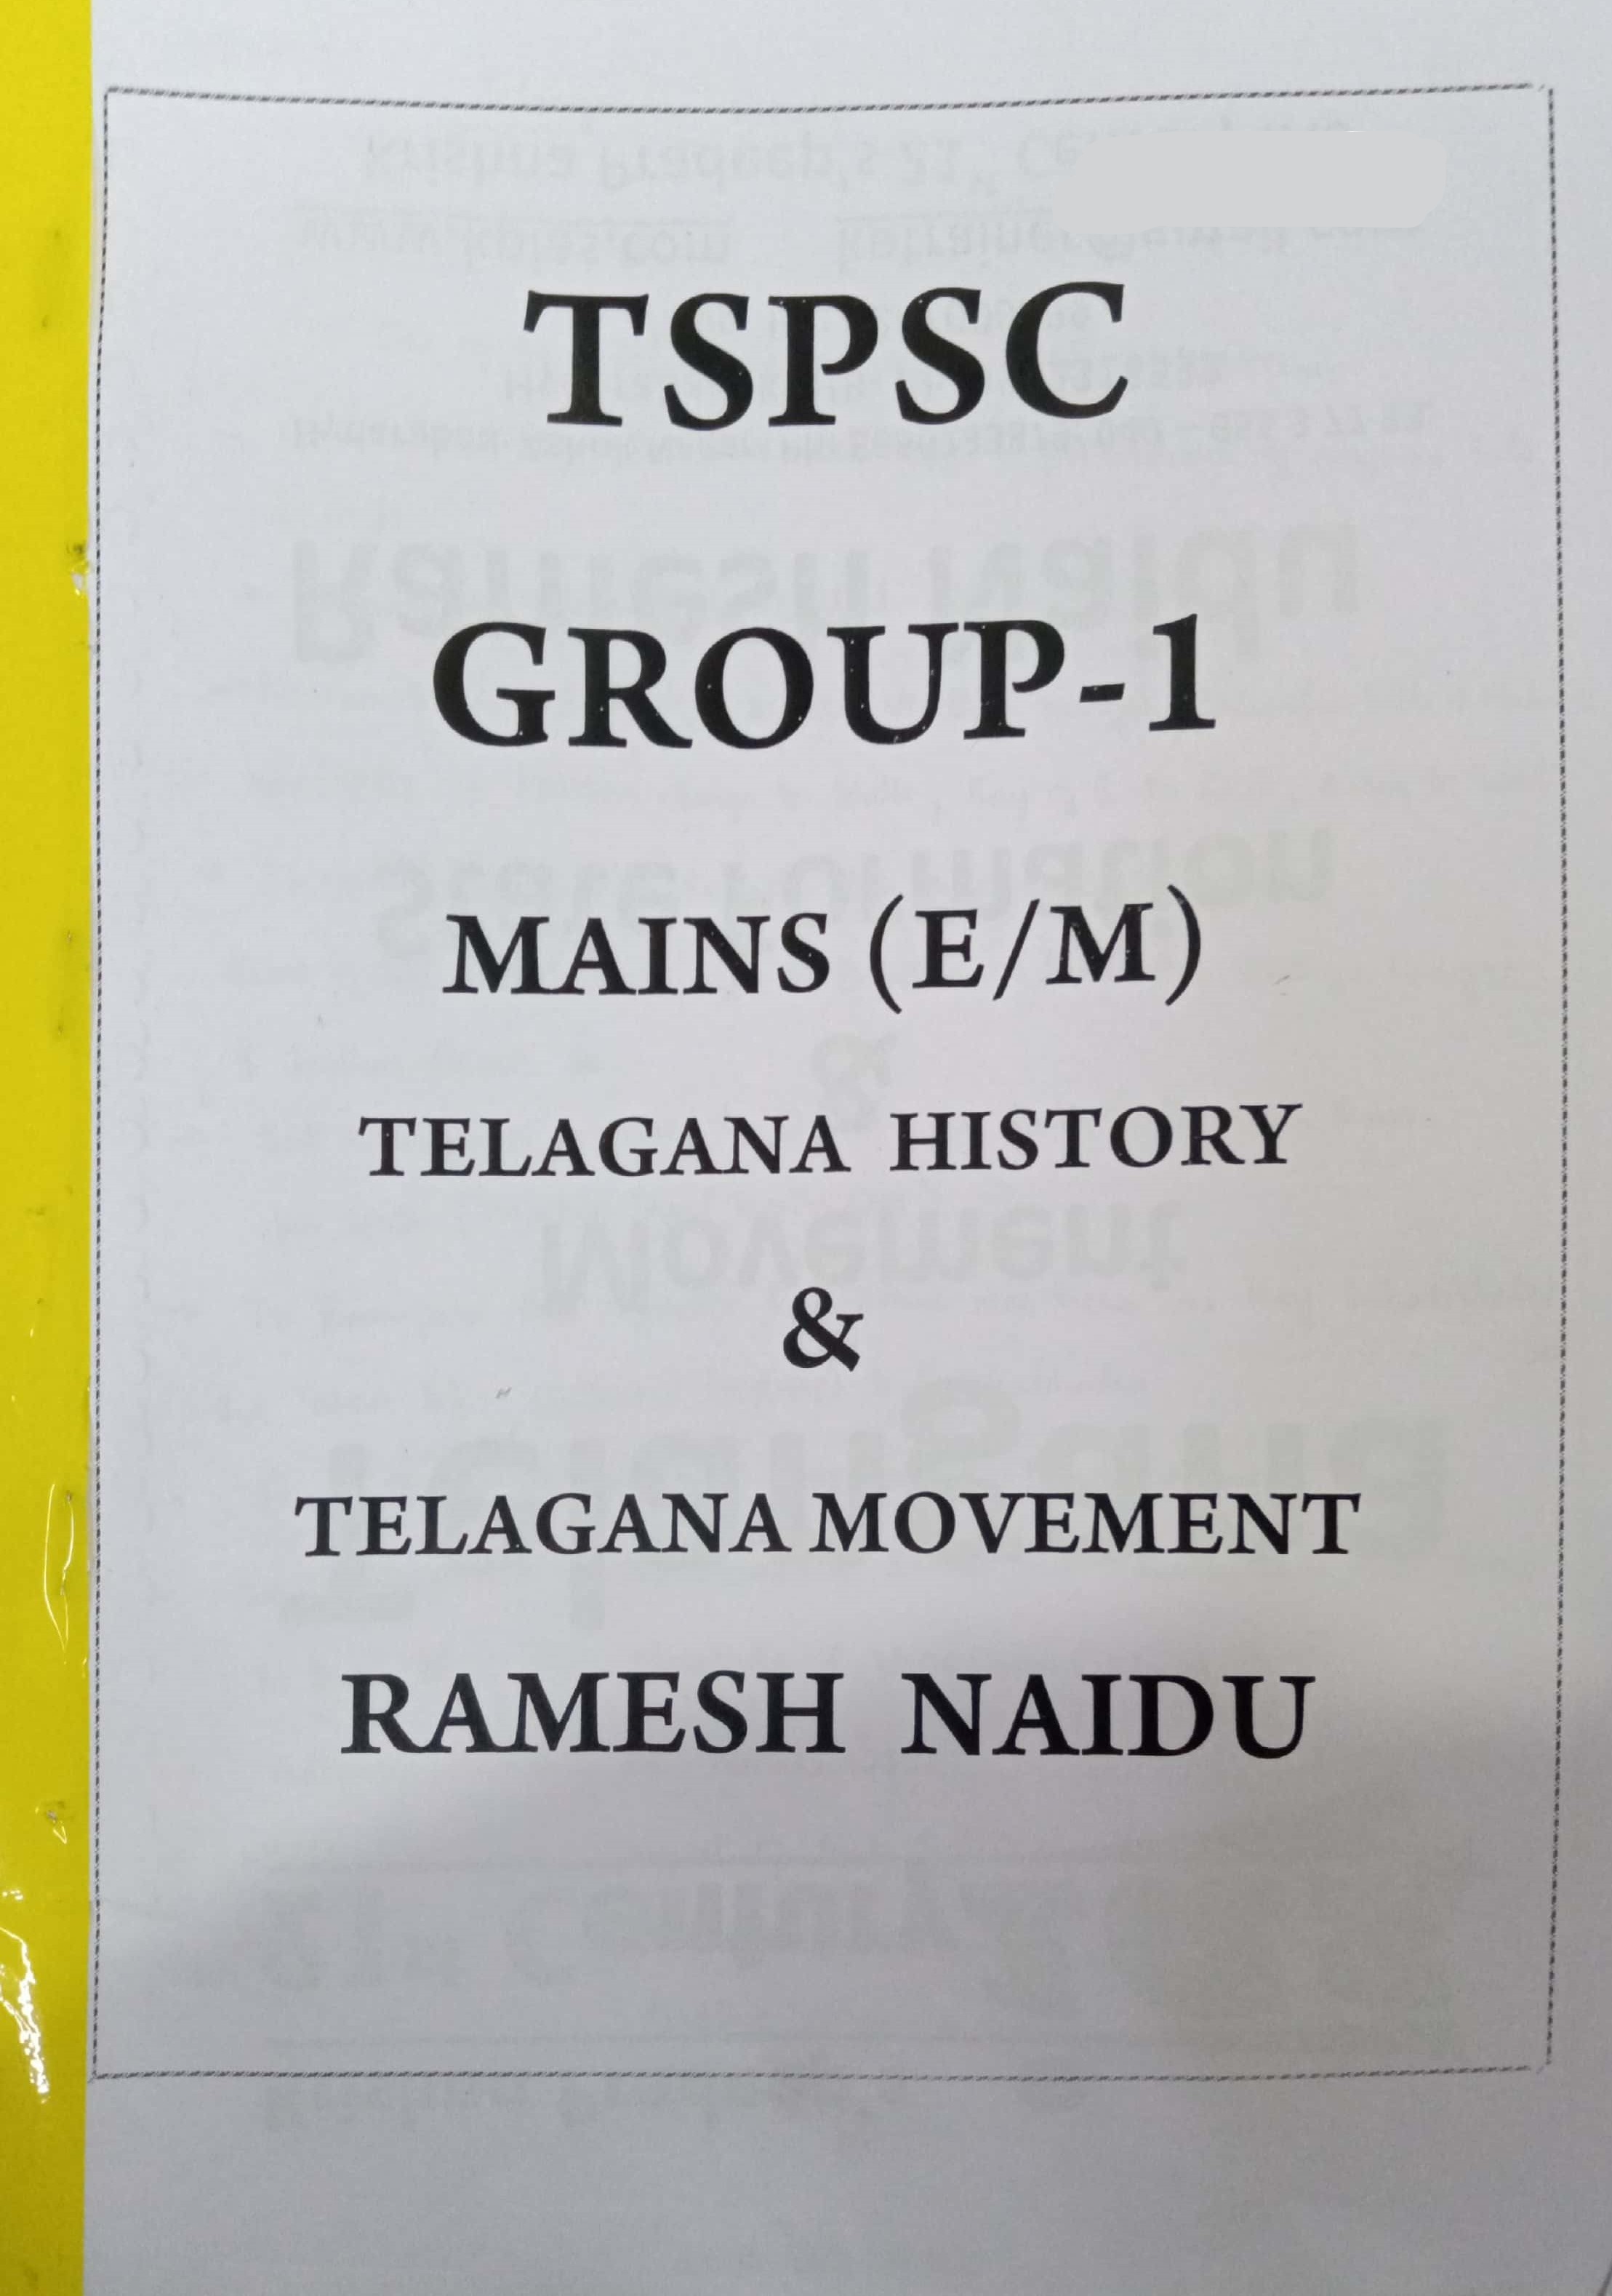 TSPSC GROUP-1 MAINS TELANGANA HISTORY & TELANGANA MOVEMENT CLASS NOTES XEROX[ENGLISH MEDIUM]